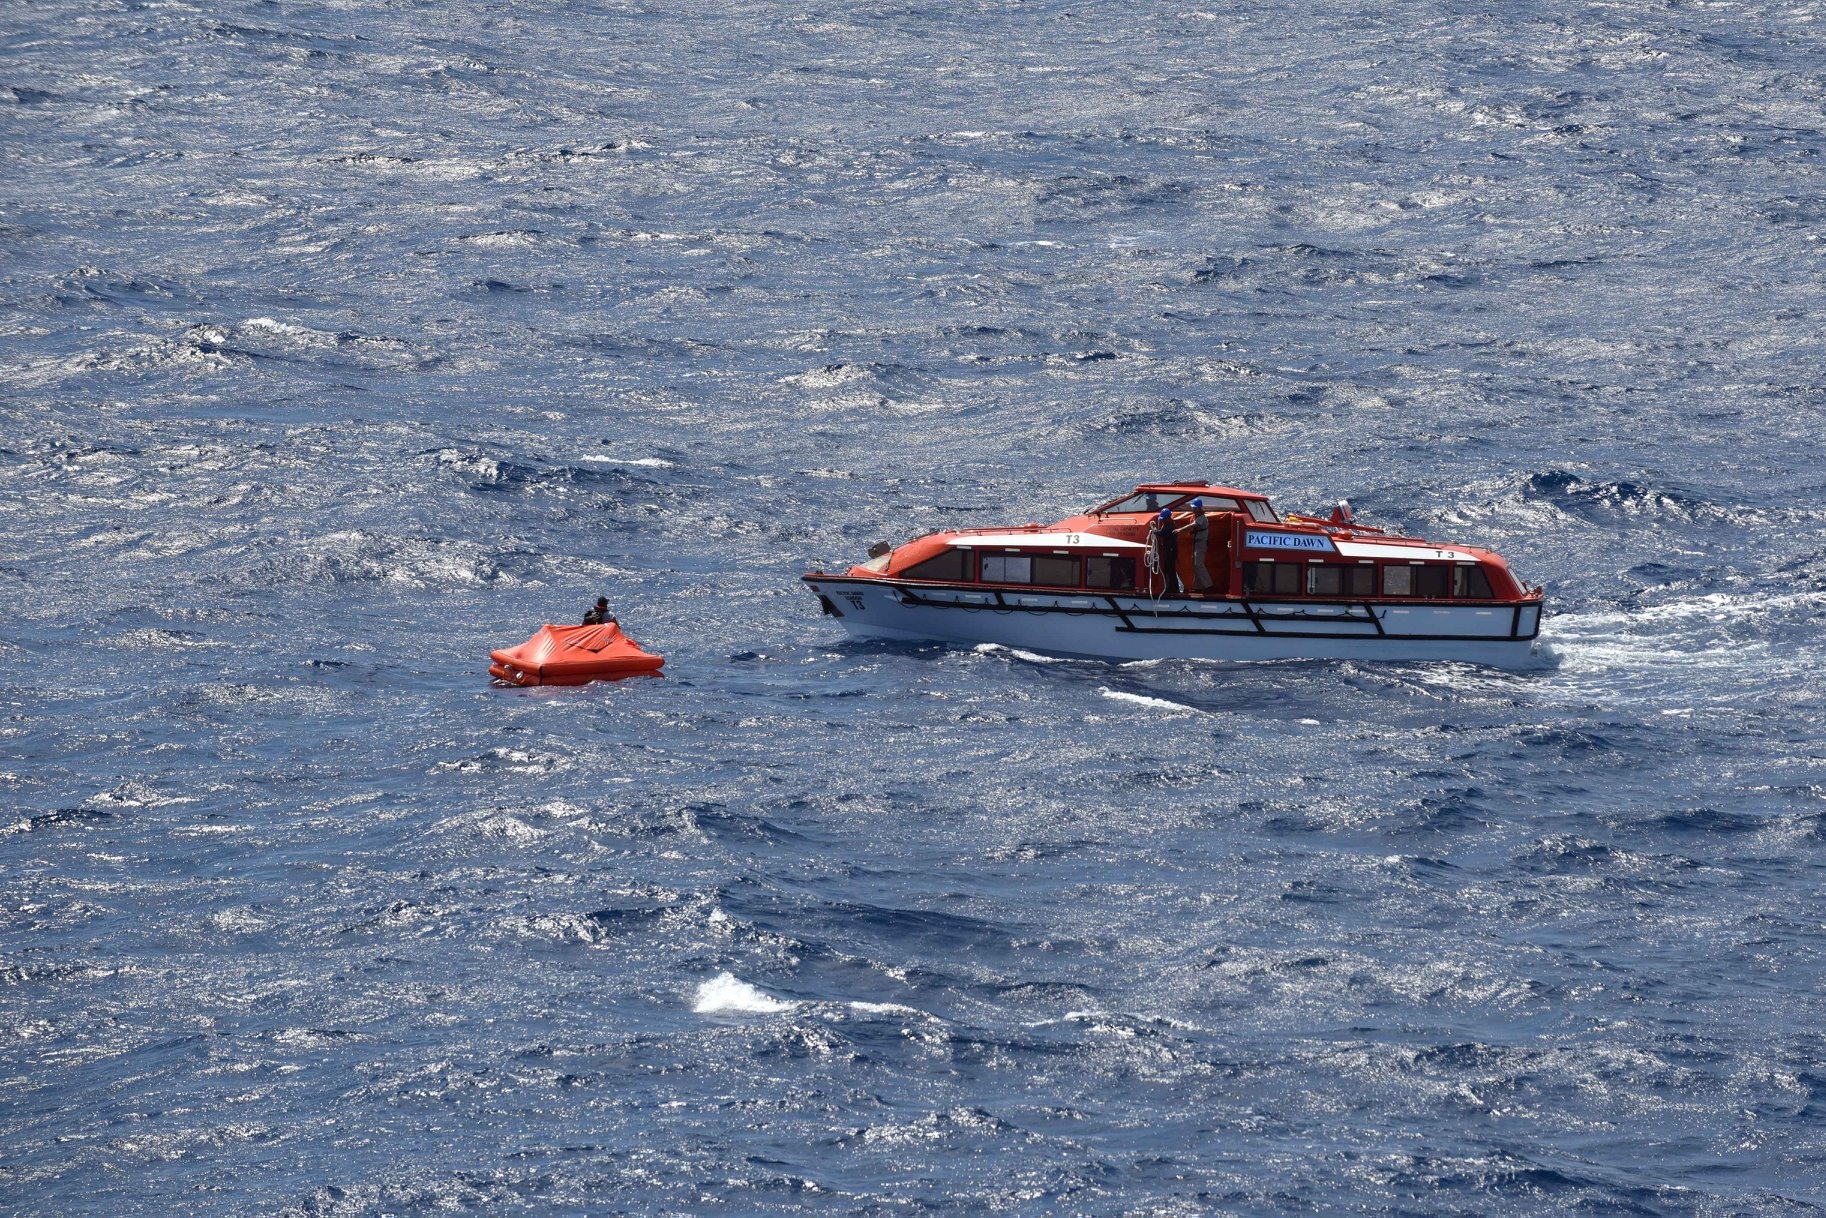 Pacific Dawn rescuing sailors near New Caledonia